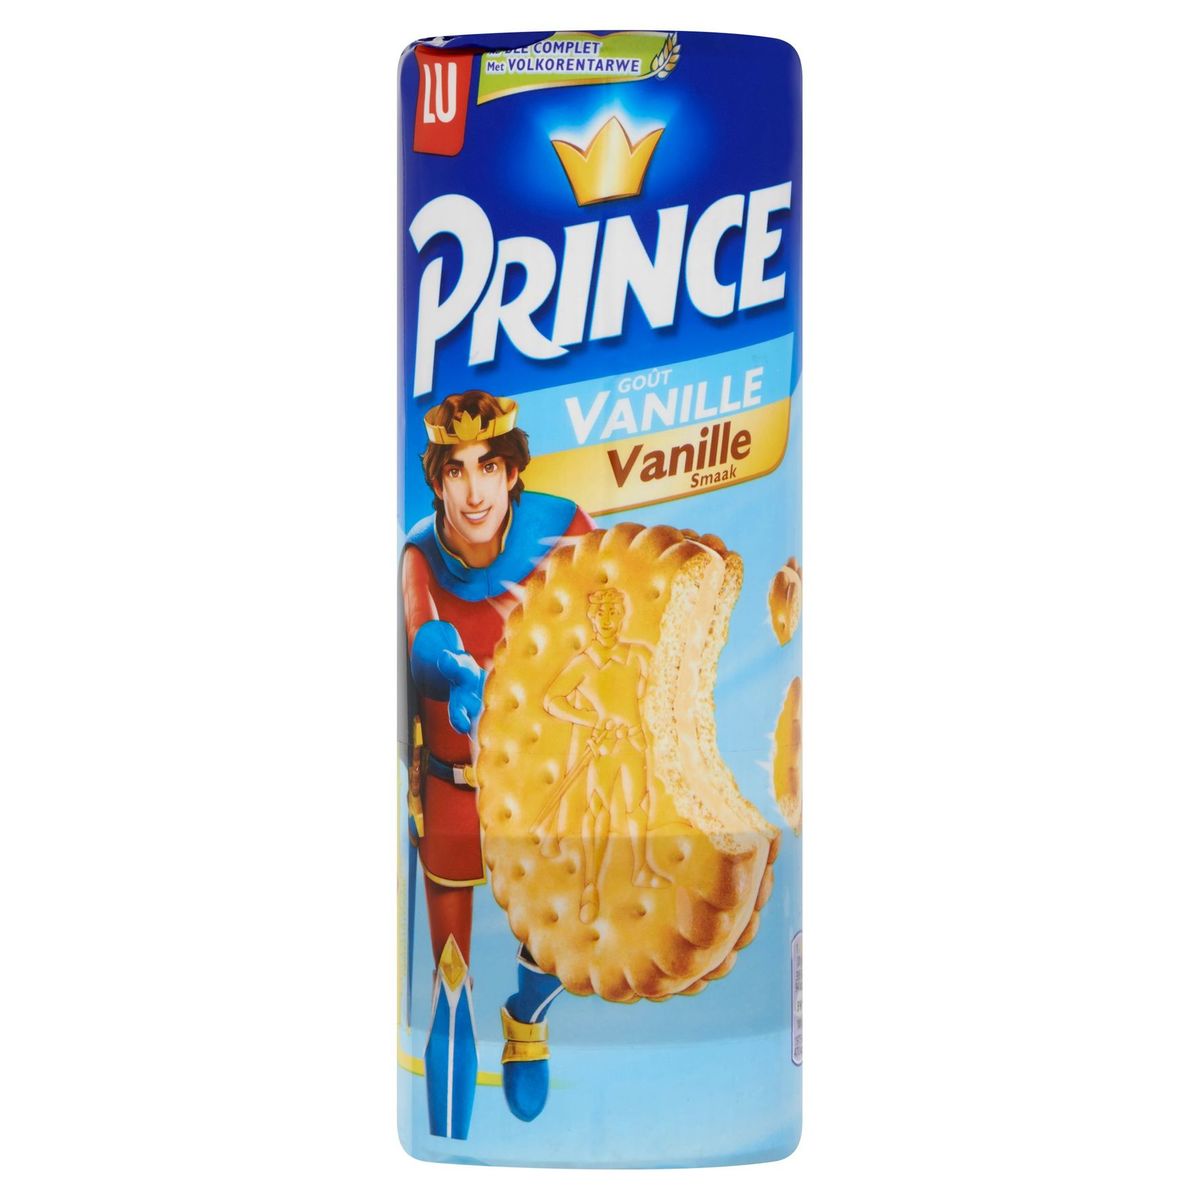 LU Prince Fourre Koekjes Vanille Smaak 300 g